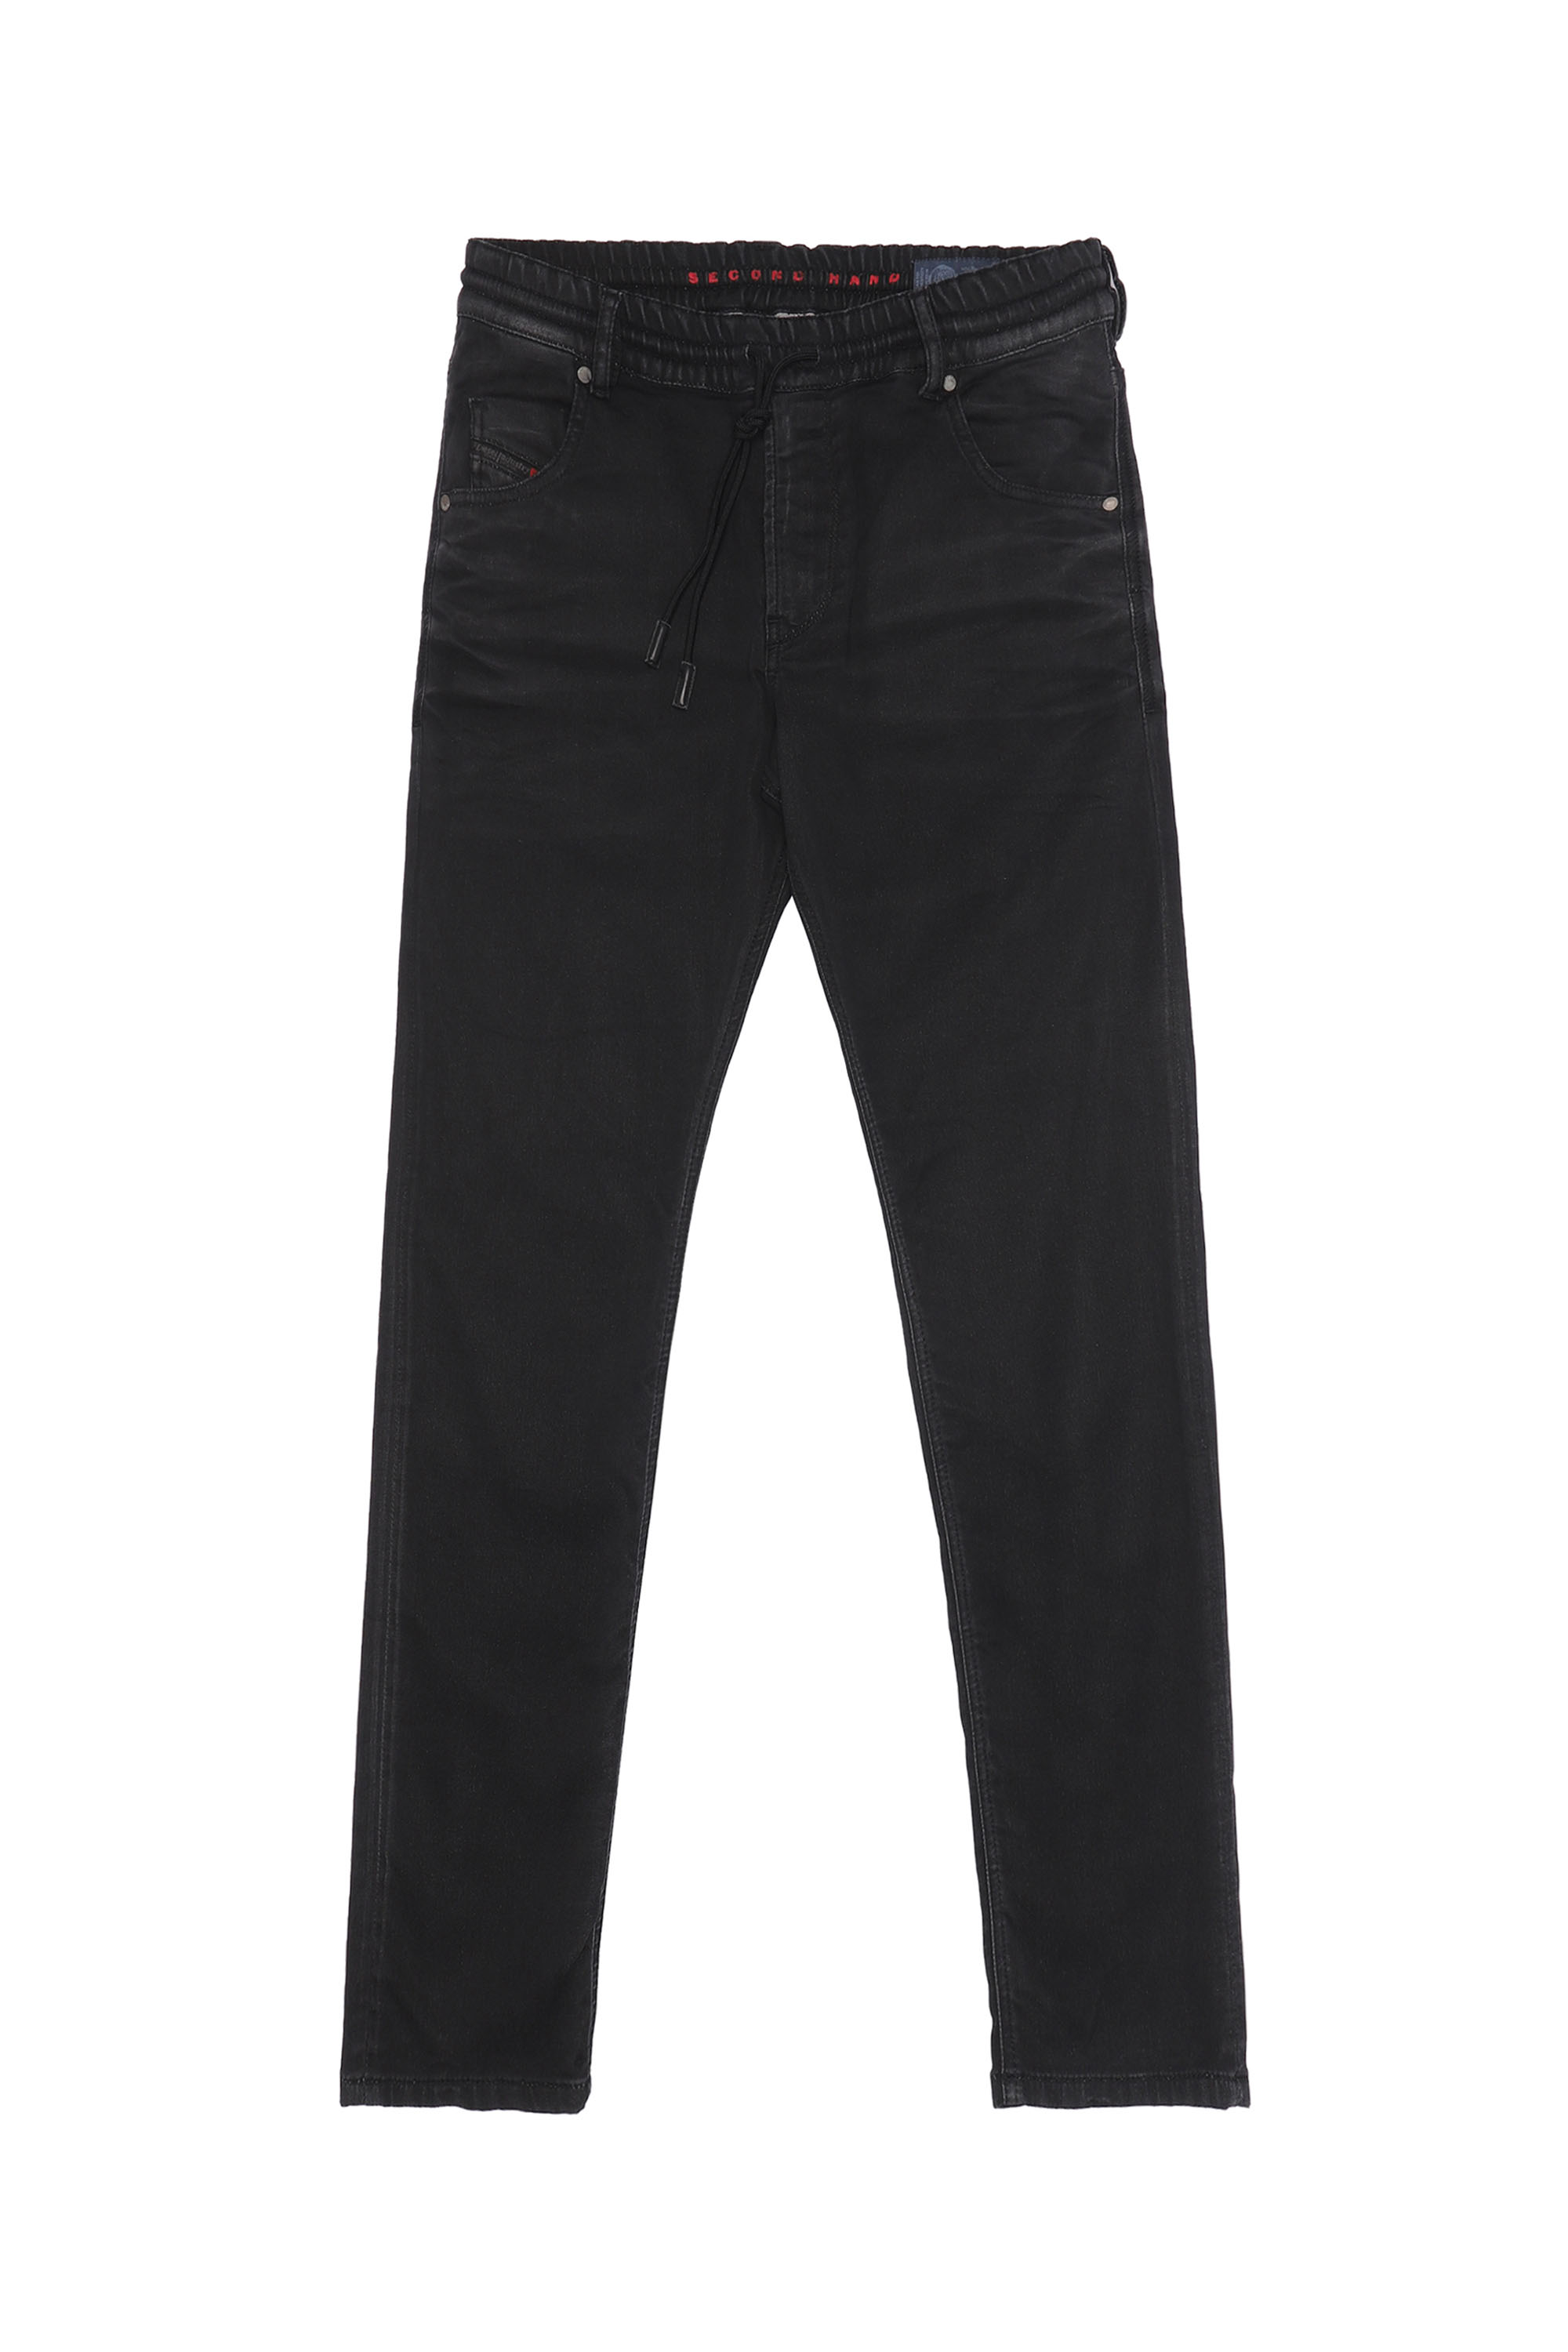 KRAILEY JoggJeans®, Black/Dark grey